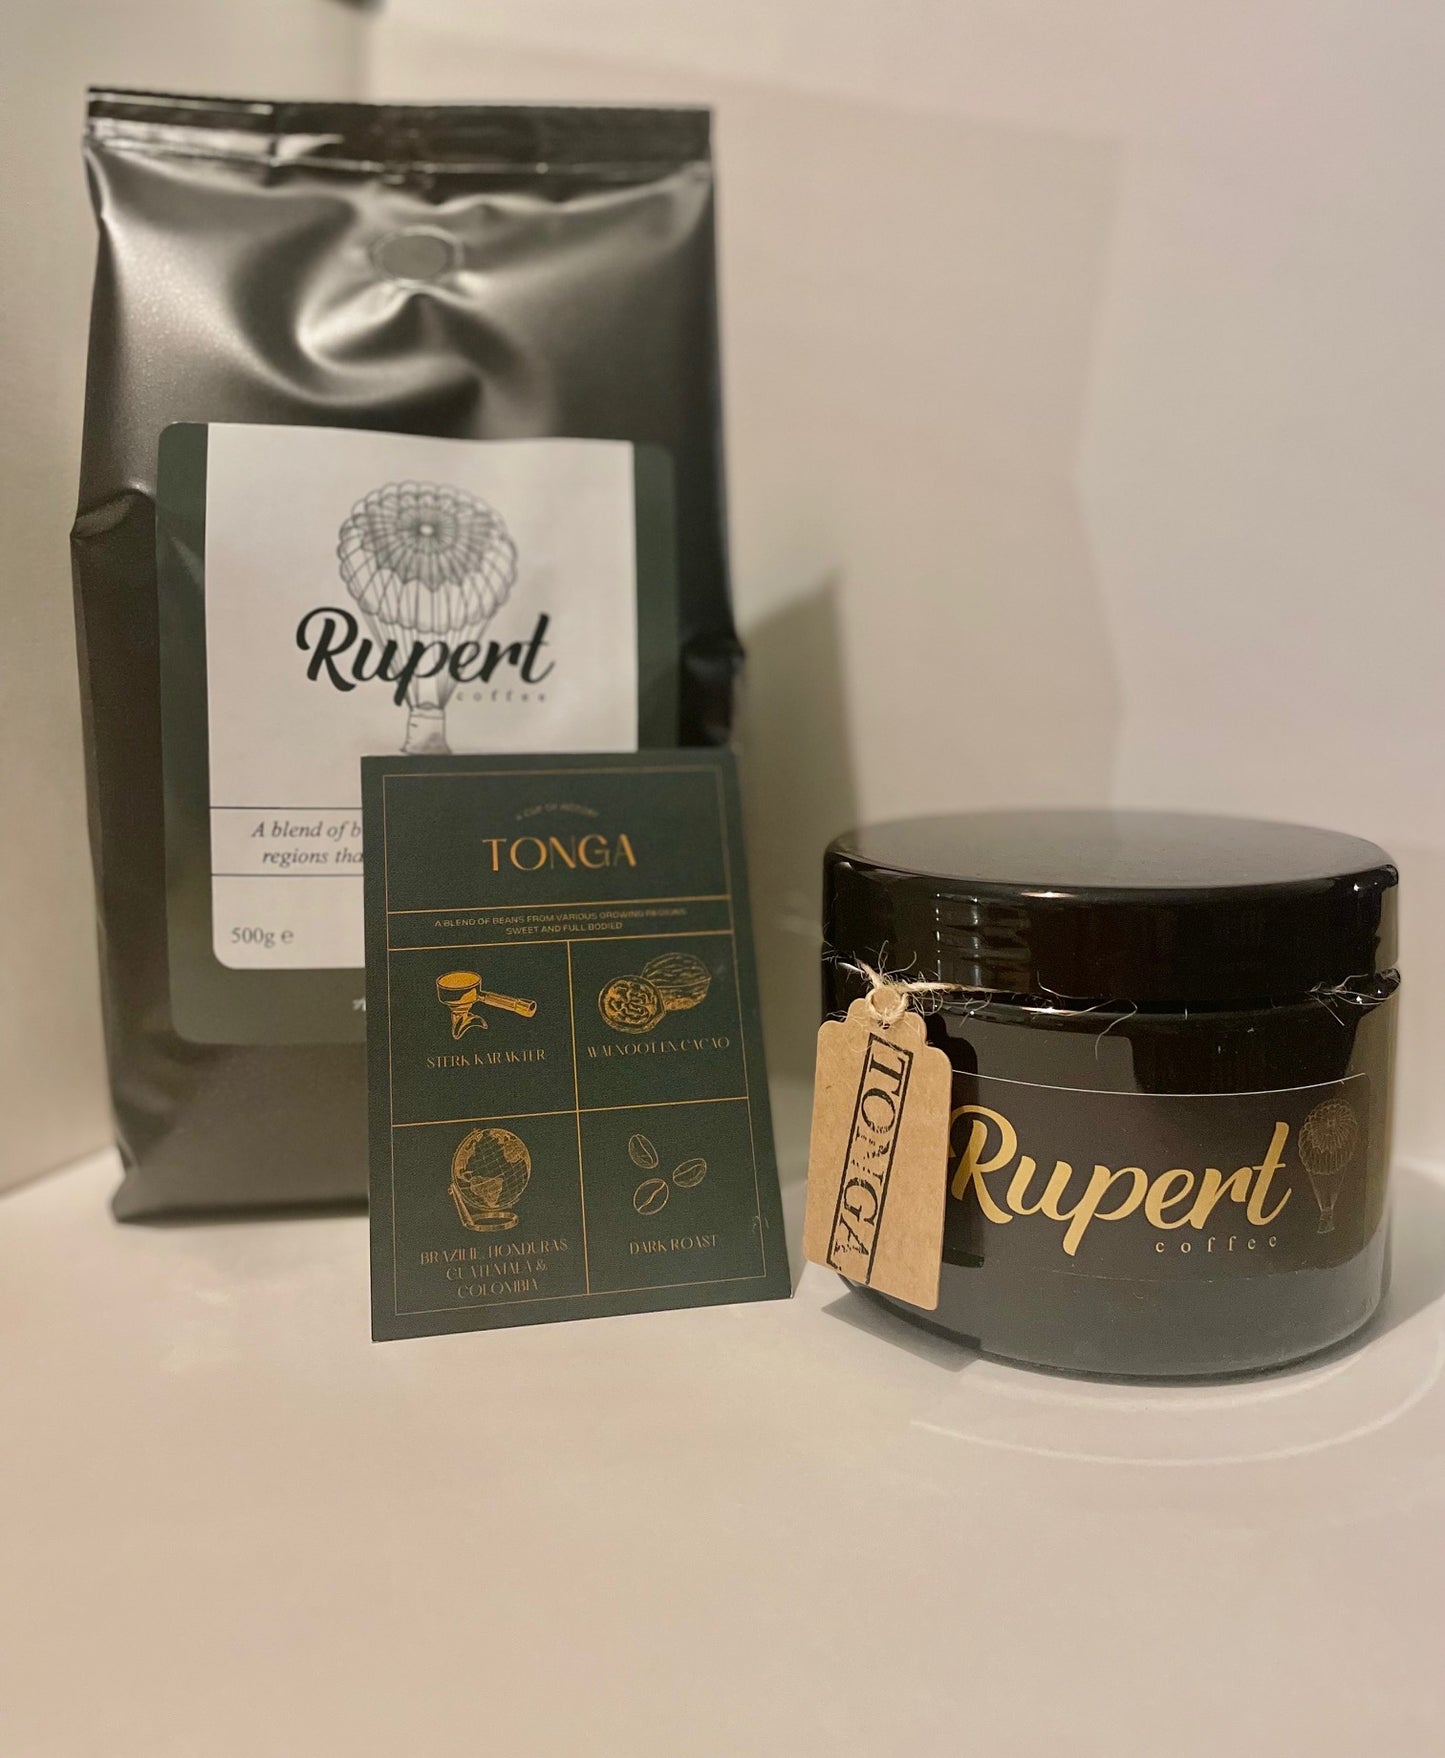 Rupert Coffee "Tonga"  herbruikbare koffieblik.  200gr